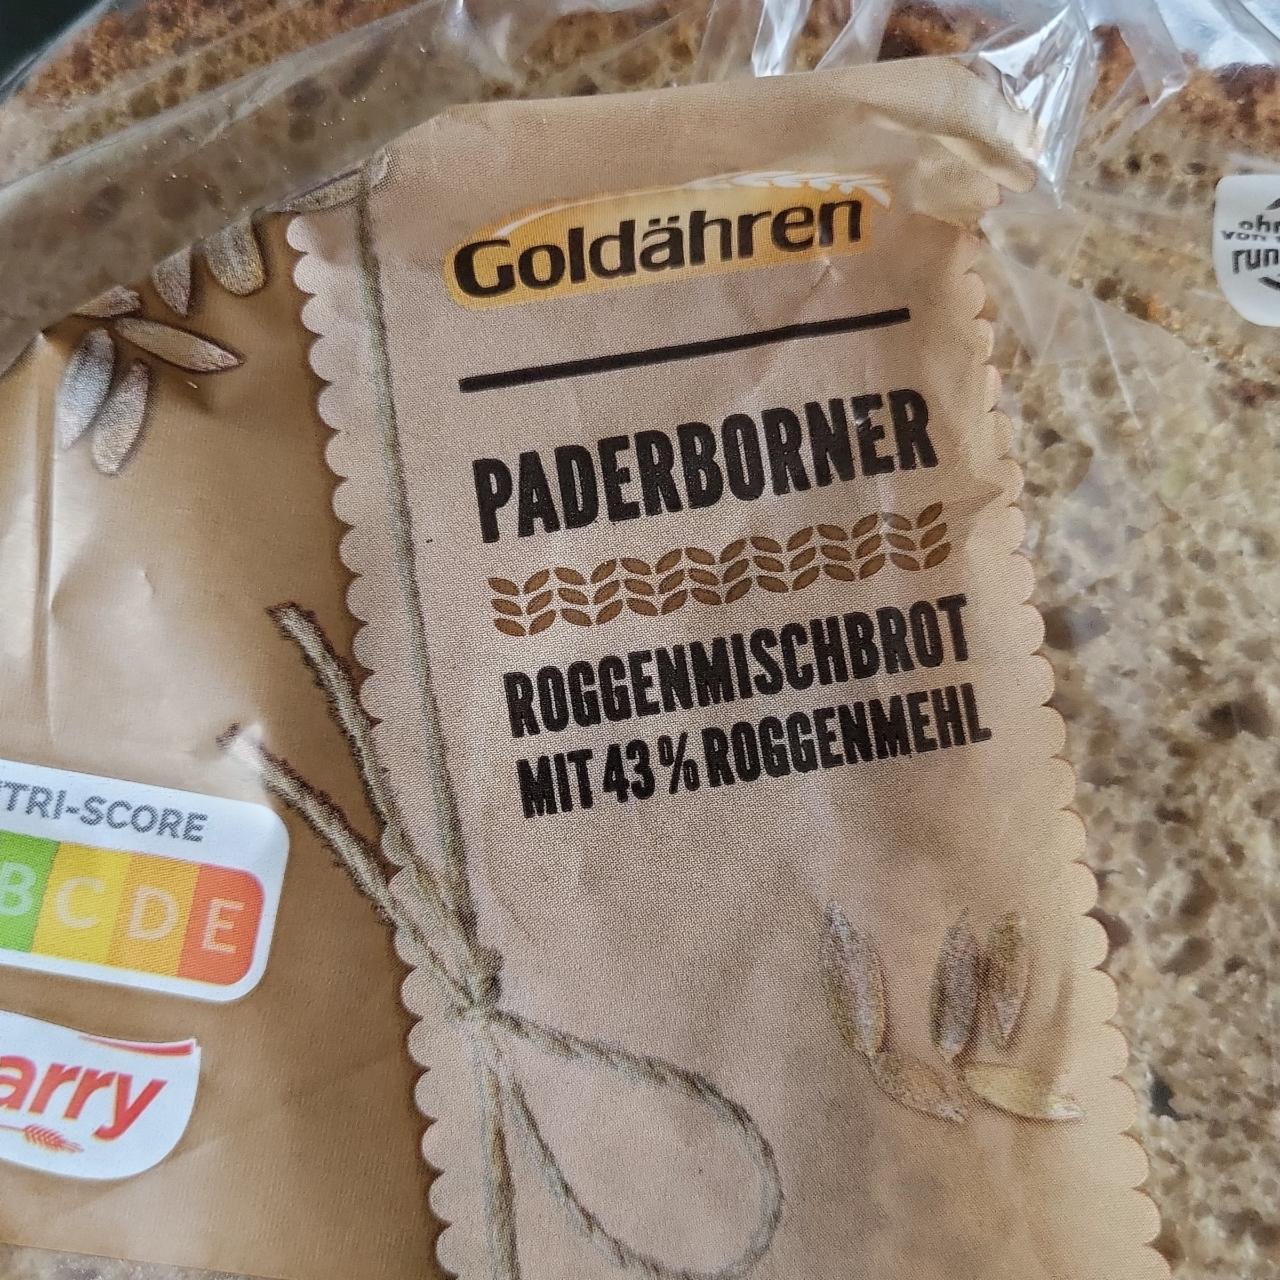 Фото - Paderborner Roggenmischbrot mit 43% roggenmehl Goldähren